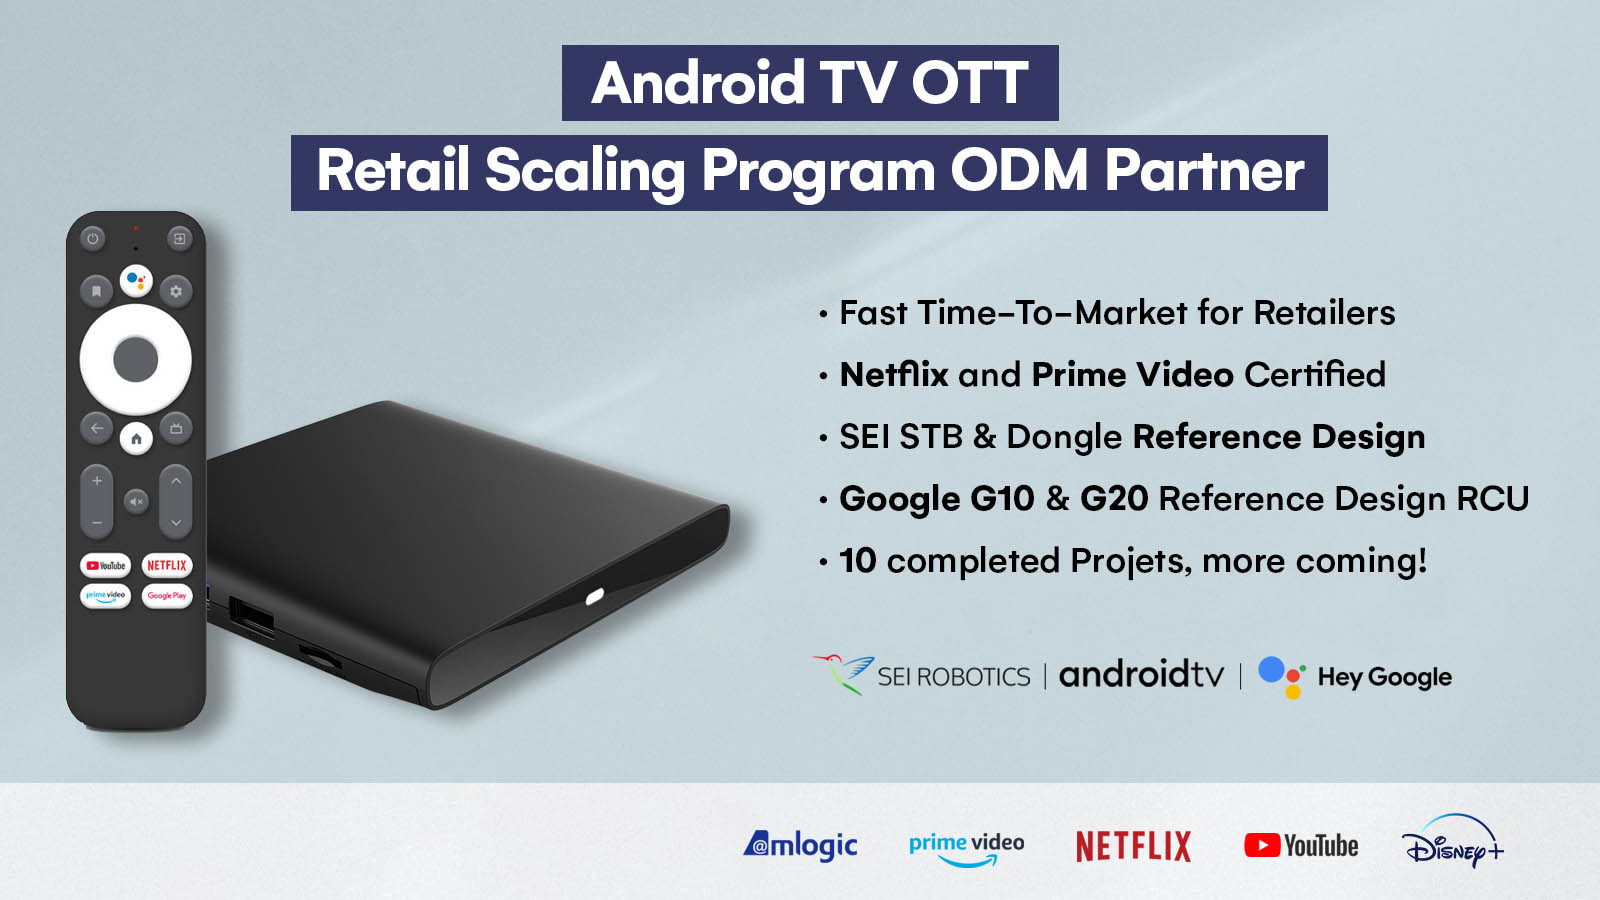 SEI Robotics is a major ODM Partner in Google's Android TV OTT Retail Scaling Program